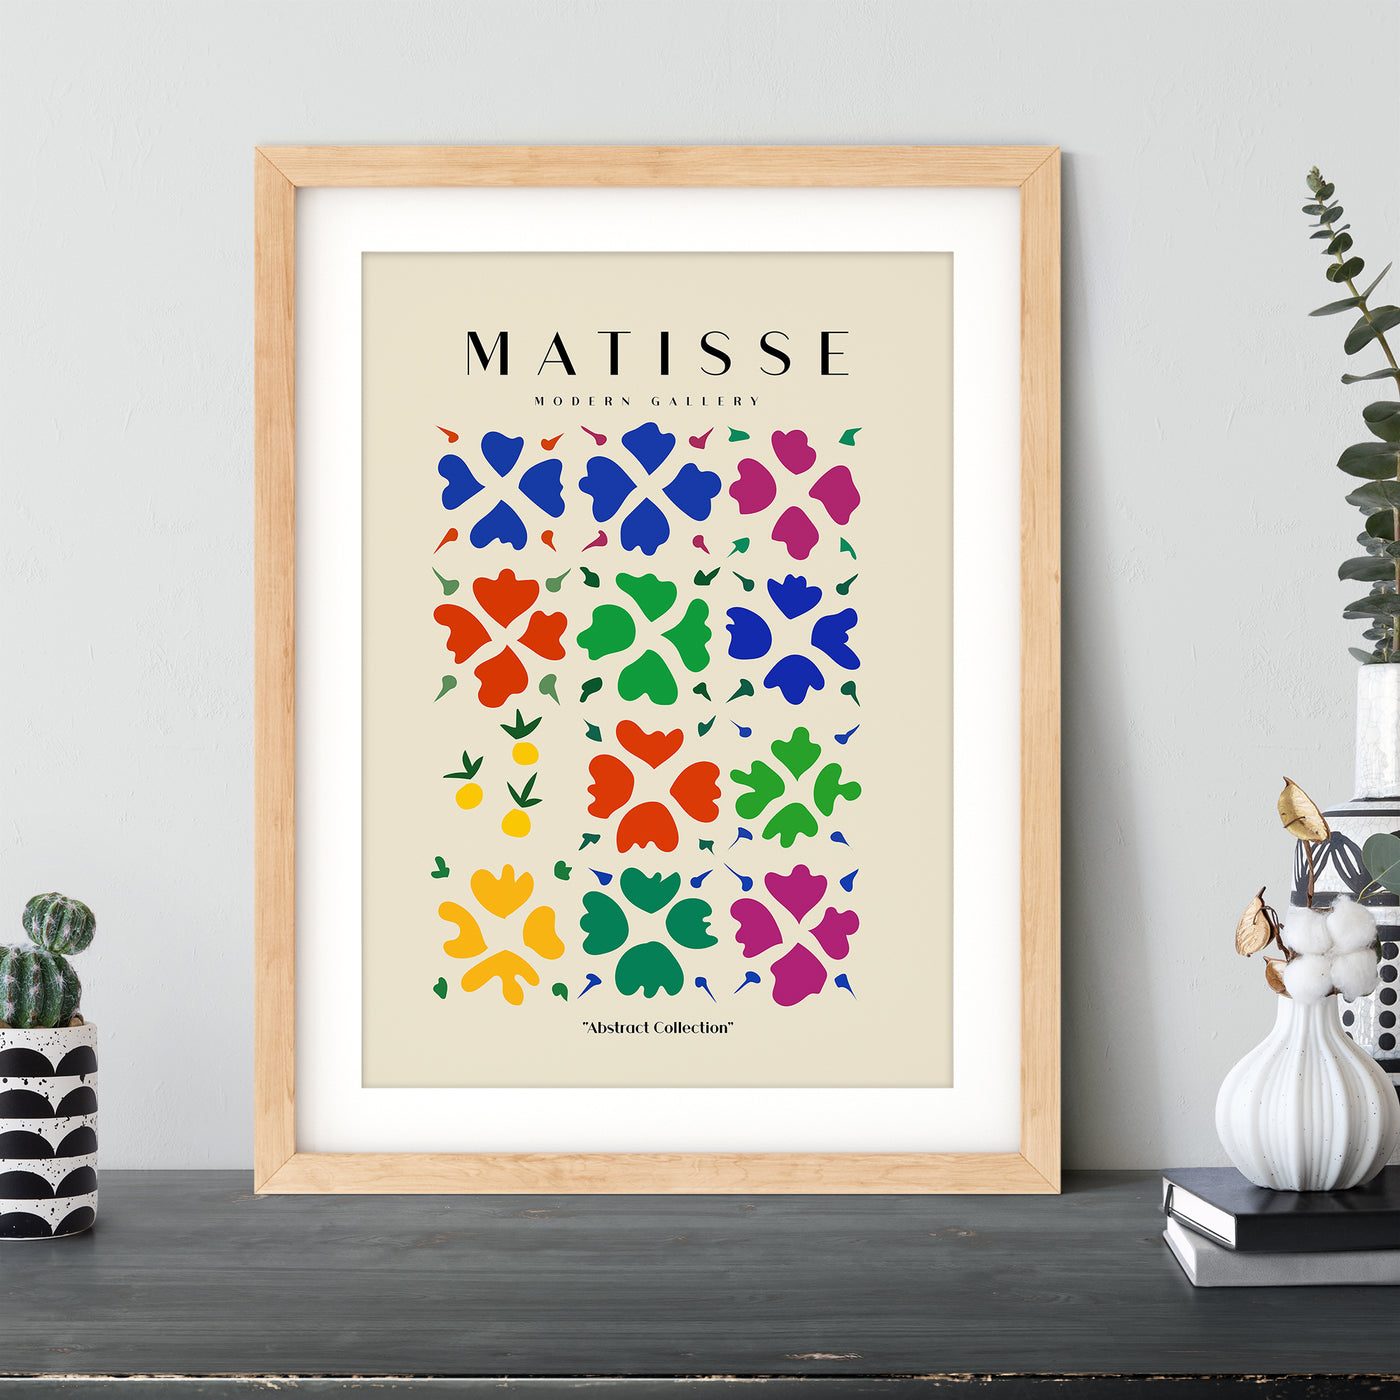 Henri Matisse - #45